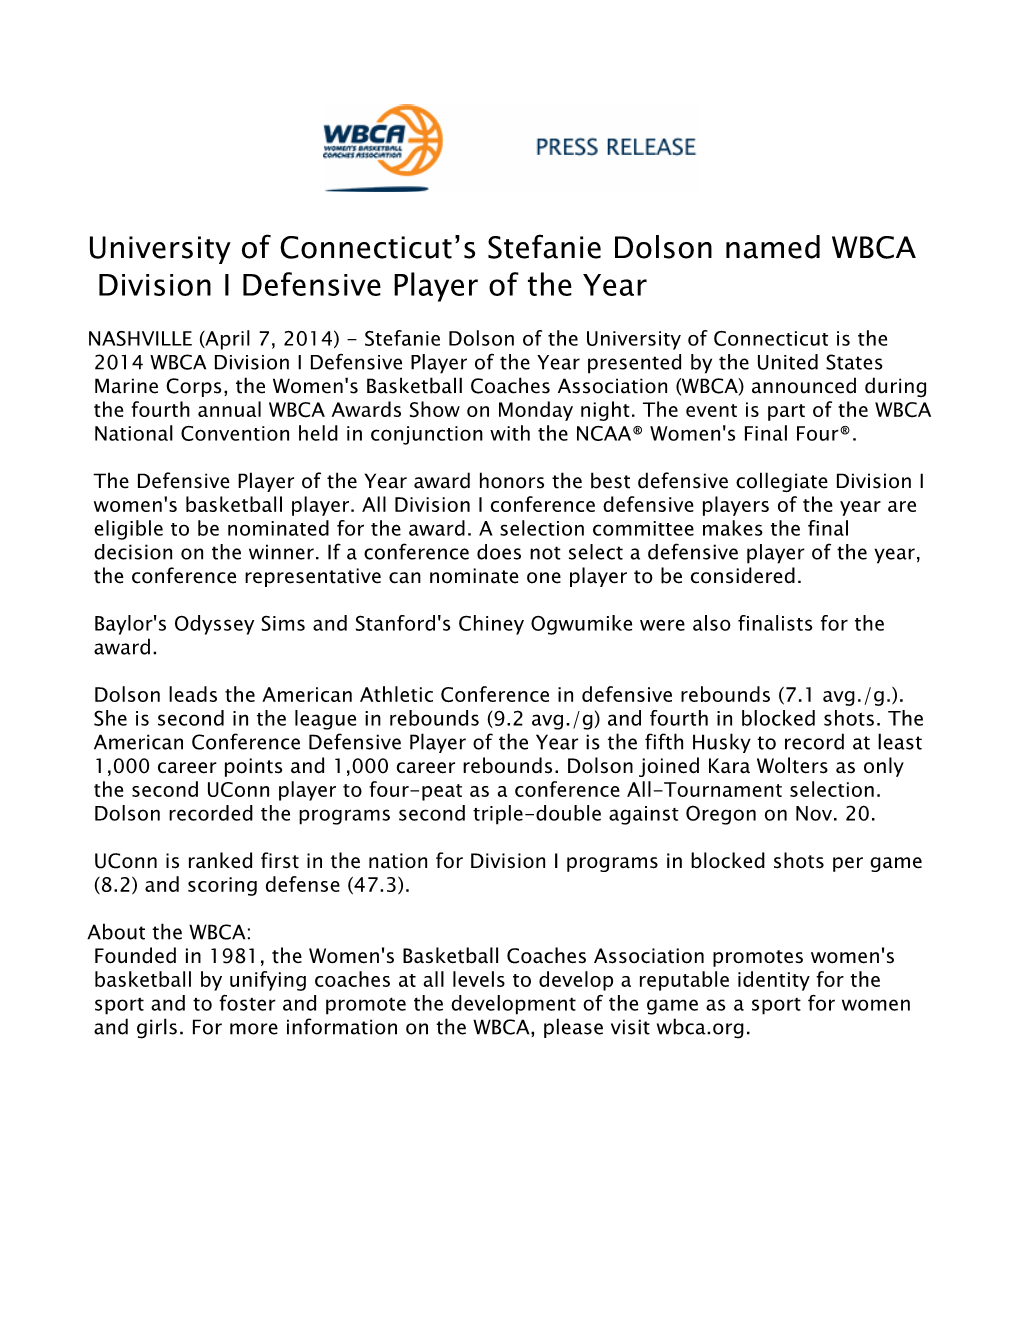 University of Connecticut's Stefanie Dolson Named WBCA Division I